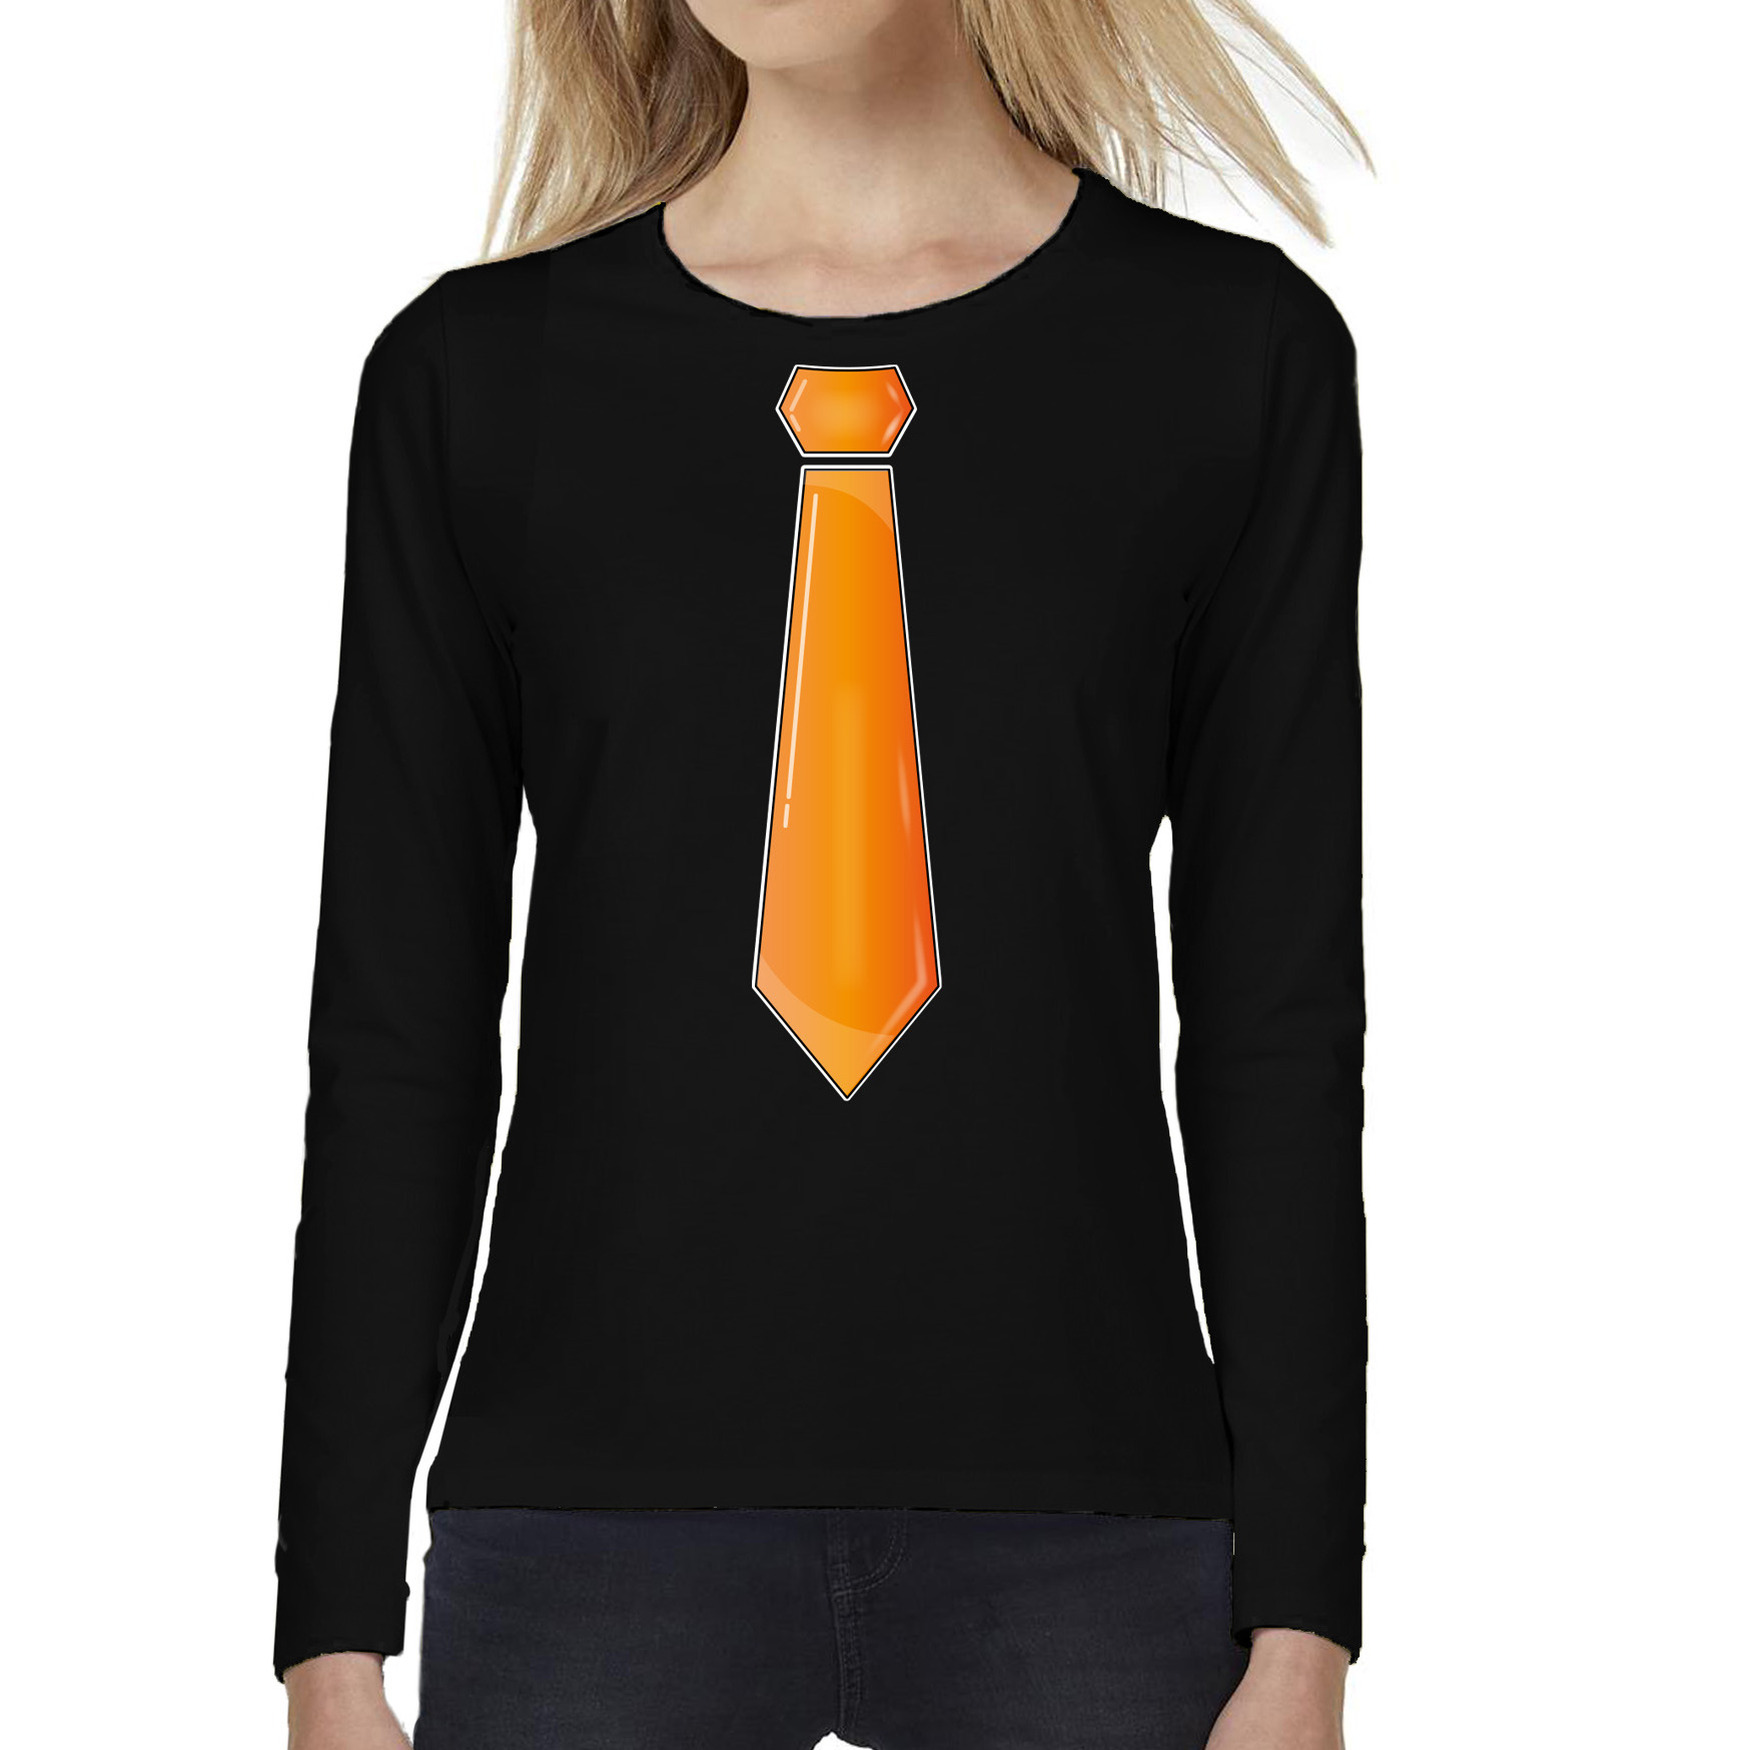 Verkleed shirt voor dames stropdas oranje zwart carnaval foute party longsleeve